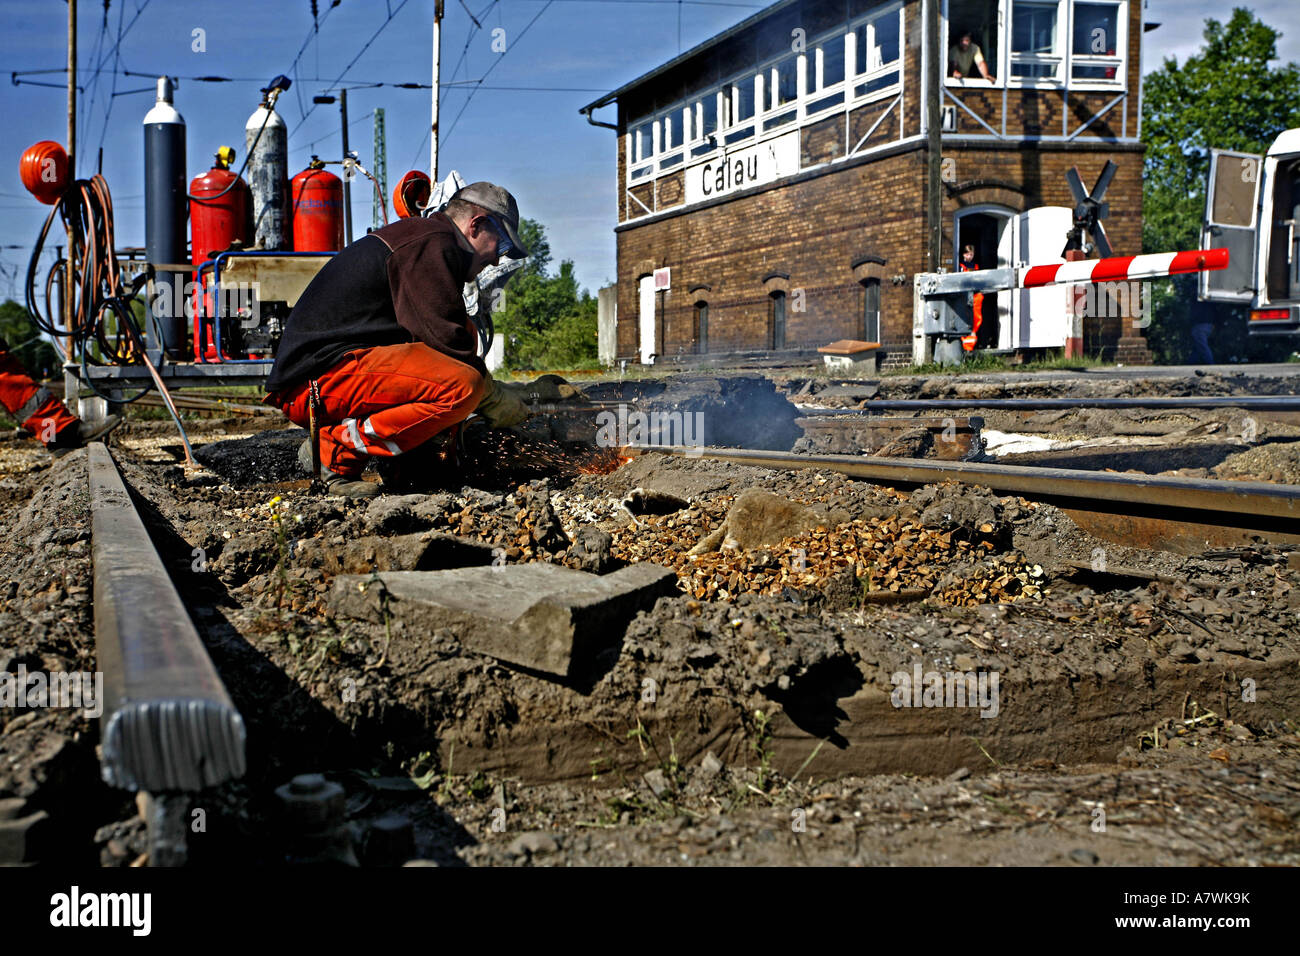 Track construction at a railway level crossing near Calau in Niederlausitz, Brandenburg, Germany Stock Photo